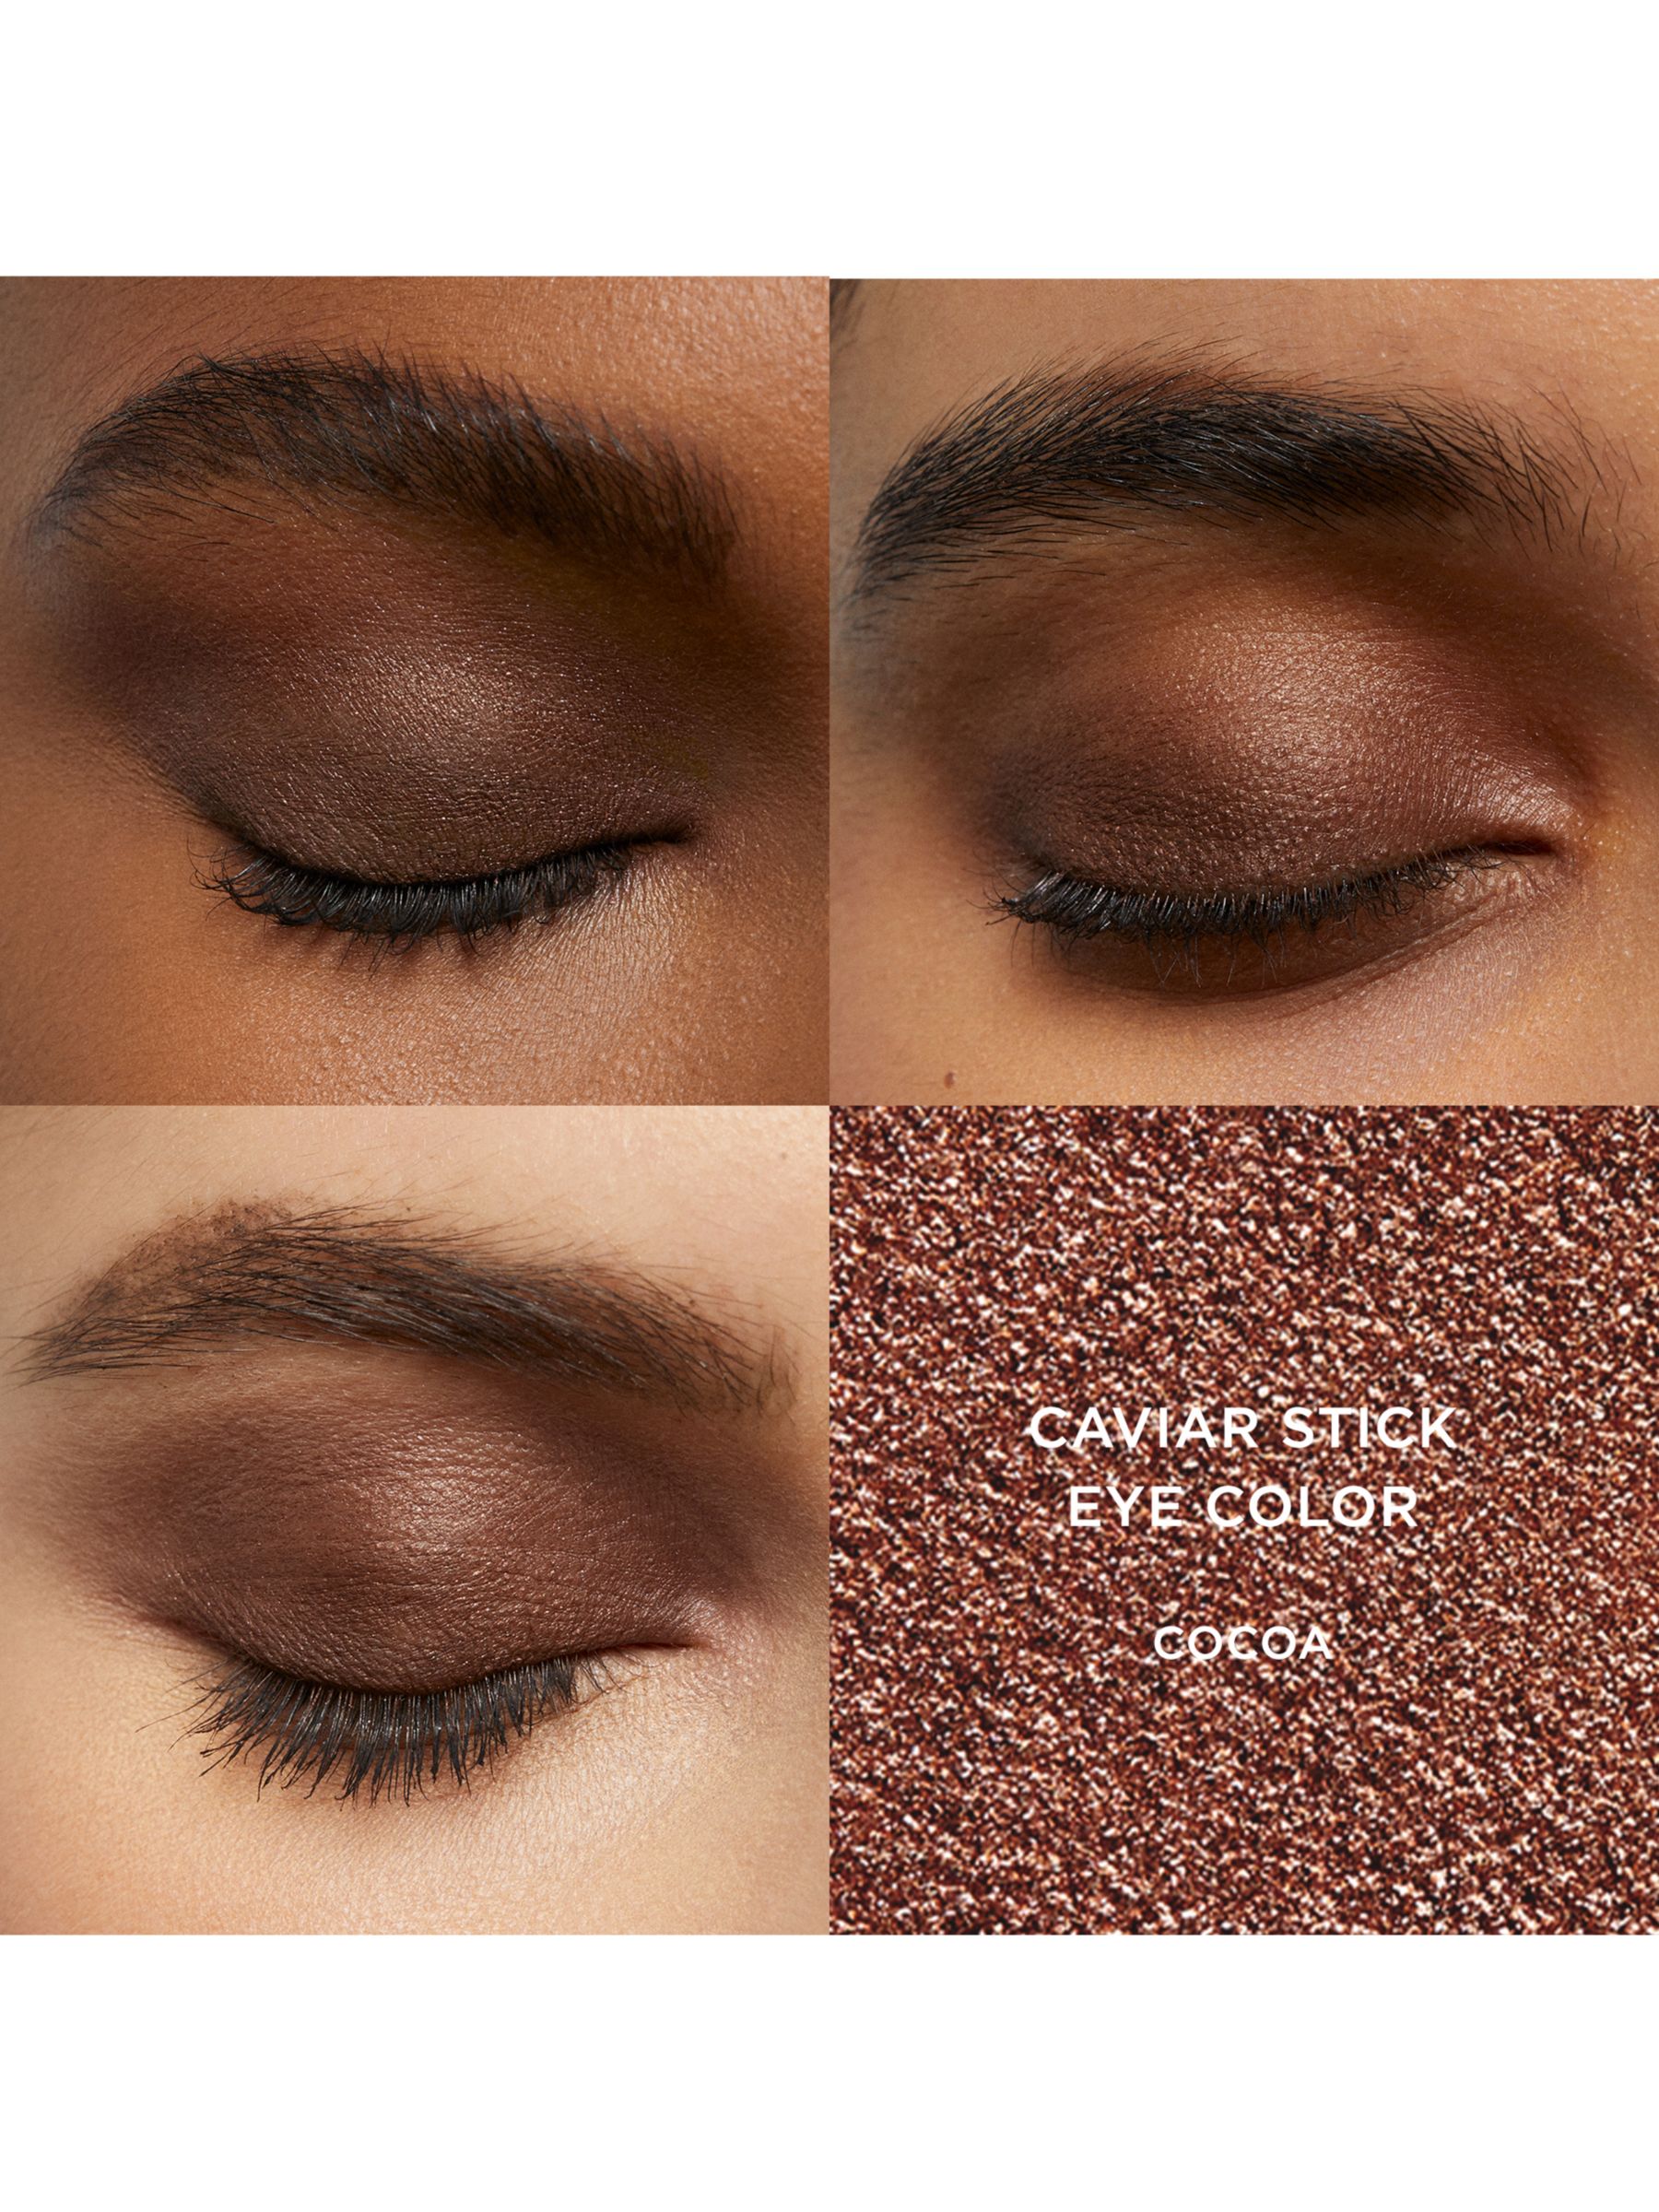 Laura Mercier Caviar Stick Eye Colour Trio Eyeshadow Set 6